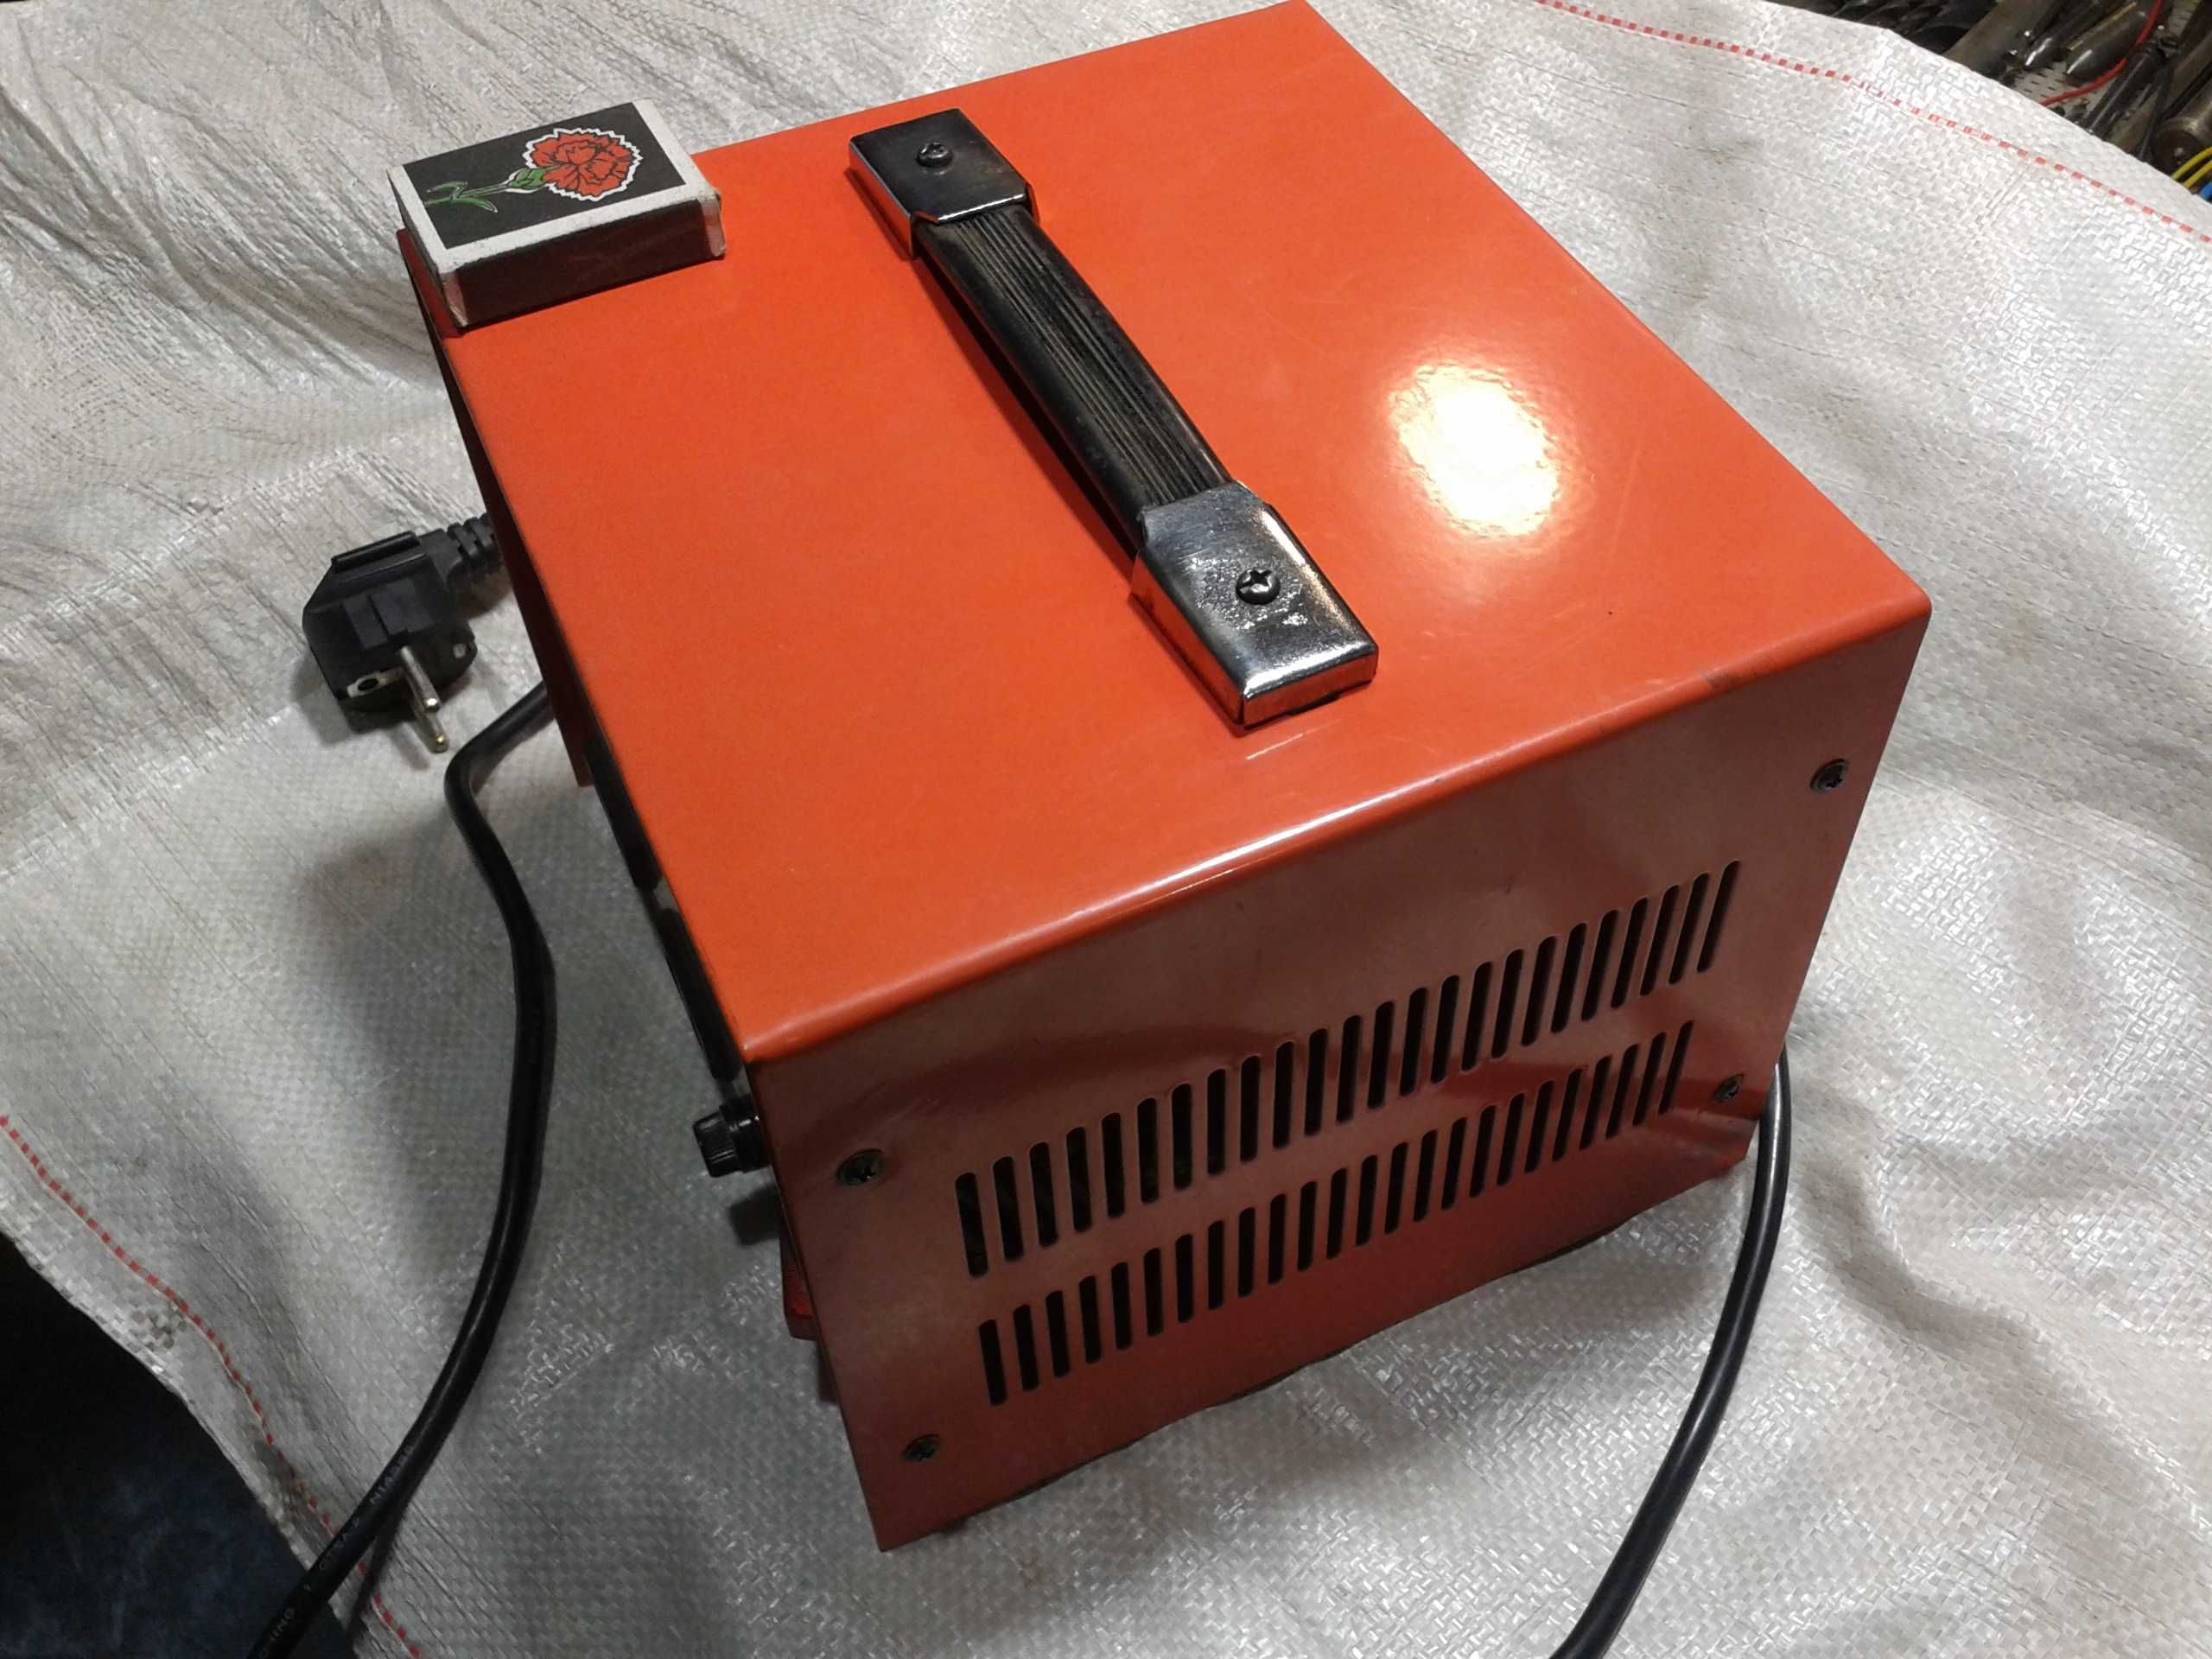 Стабилизатор электромеханический SASSIN SVC-1000W